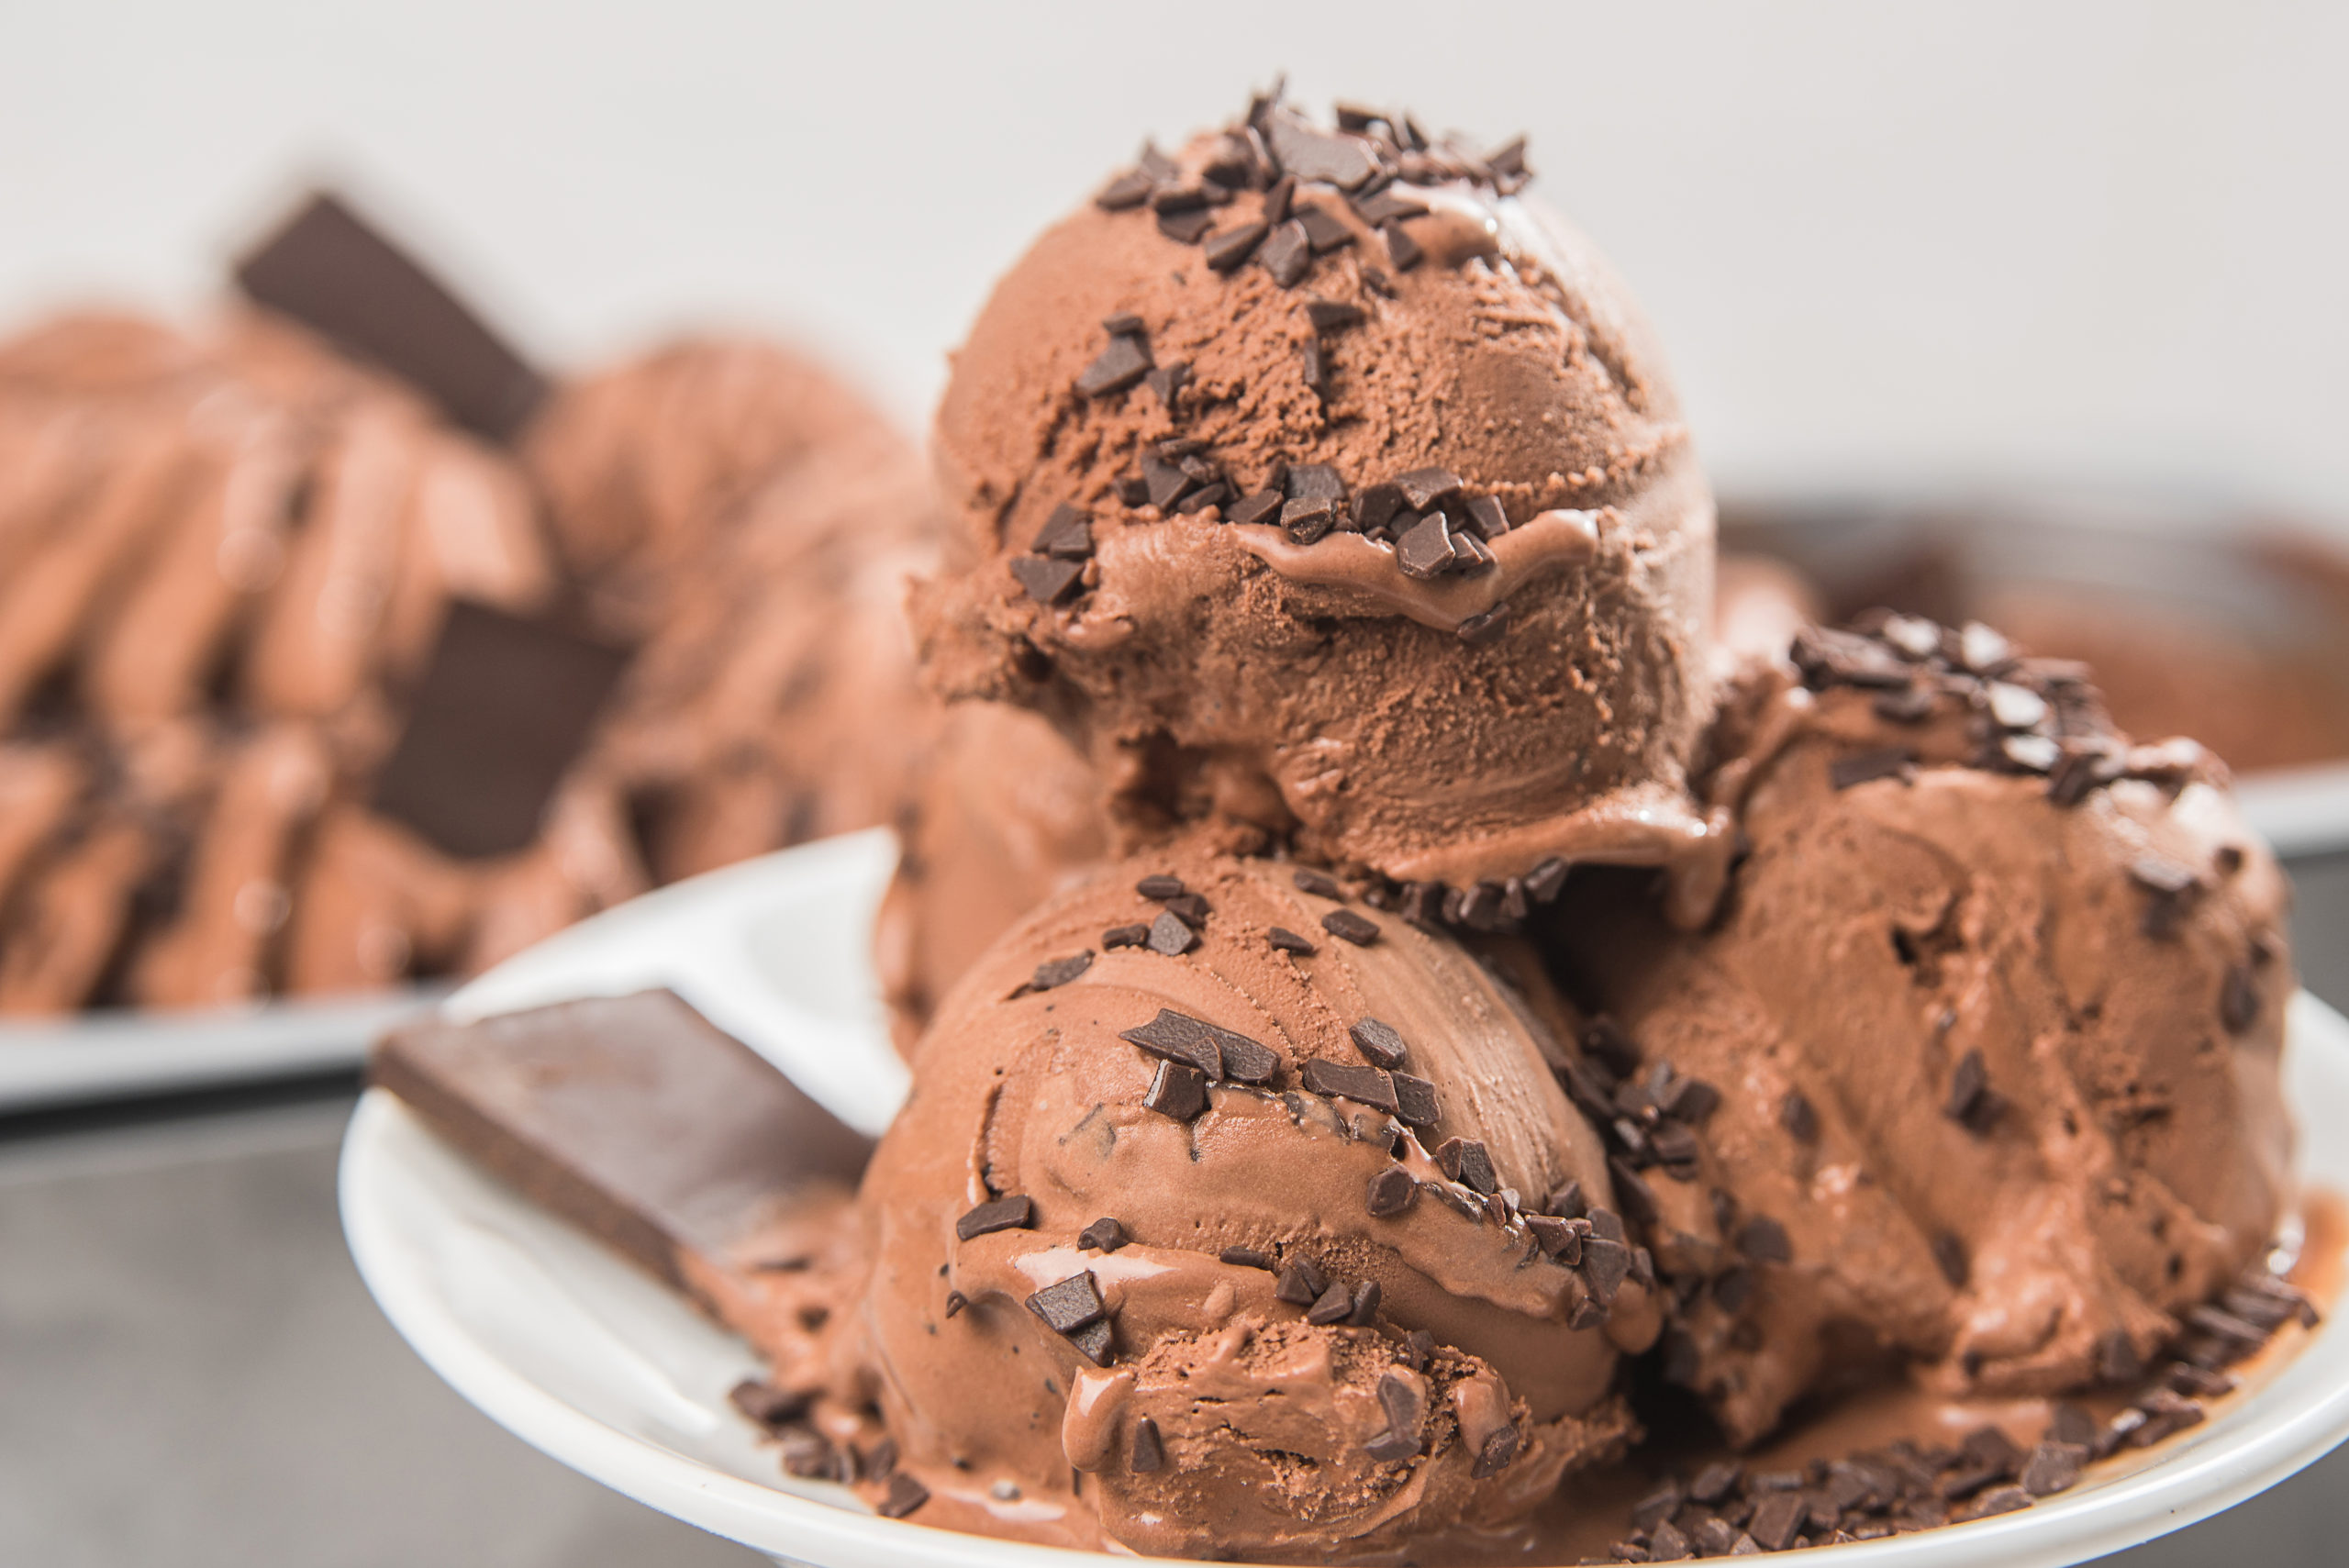 Choco ice. Мороженое пломбир шоколадный. Шоколадное мороженое. Красивое мороженое. Шоколадное мороженой с шоколадной крошкой.